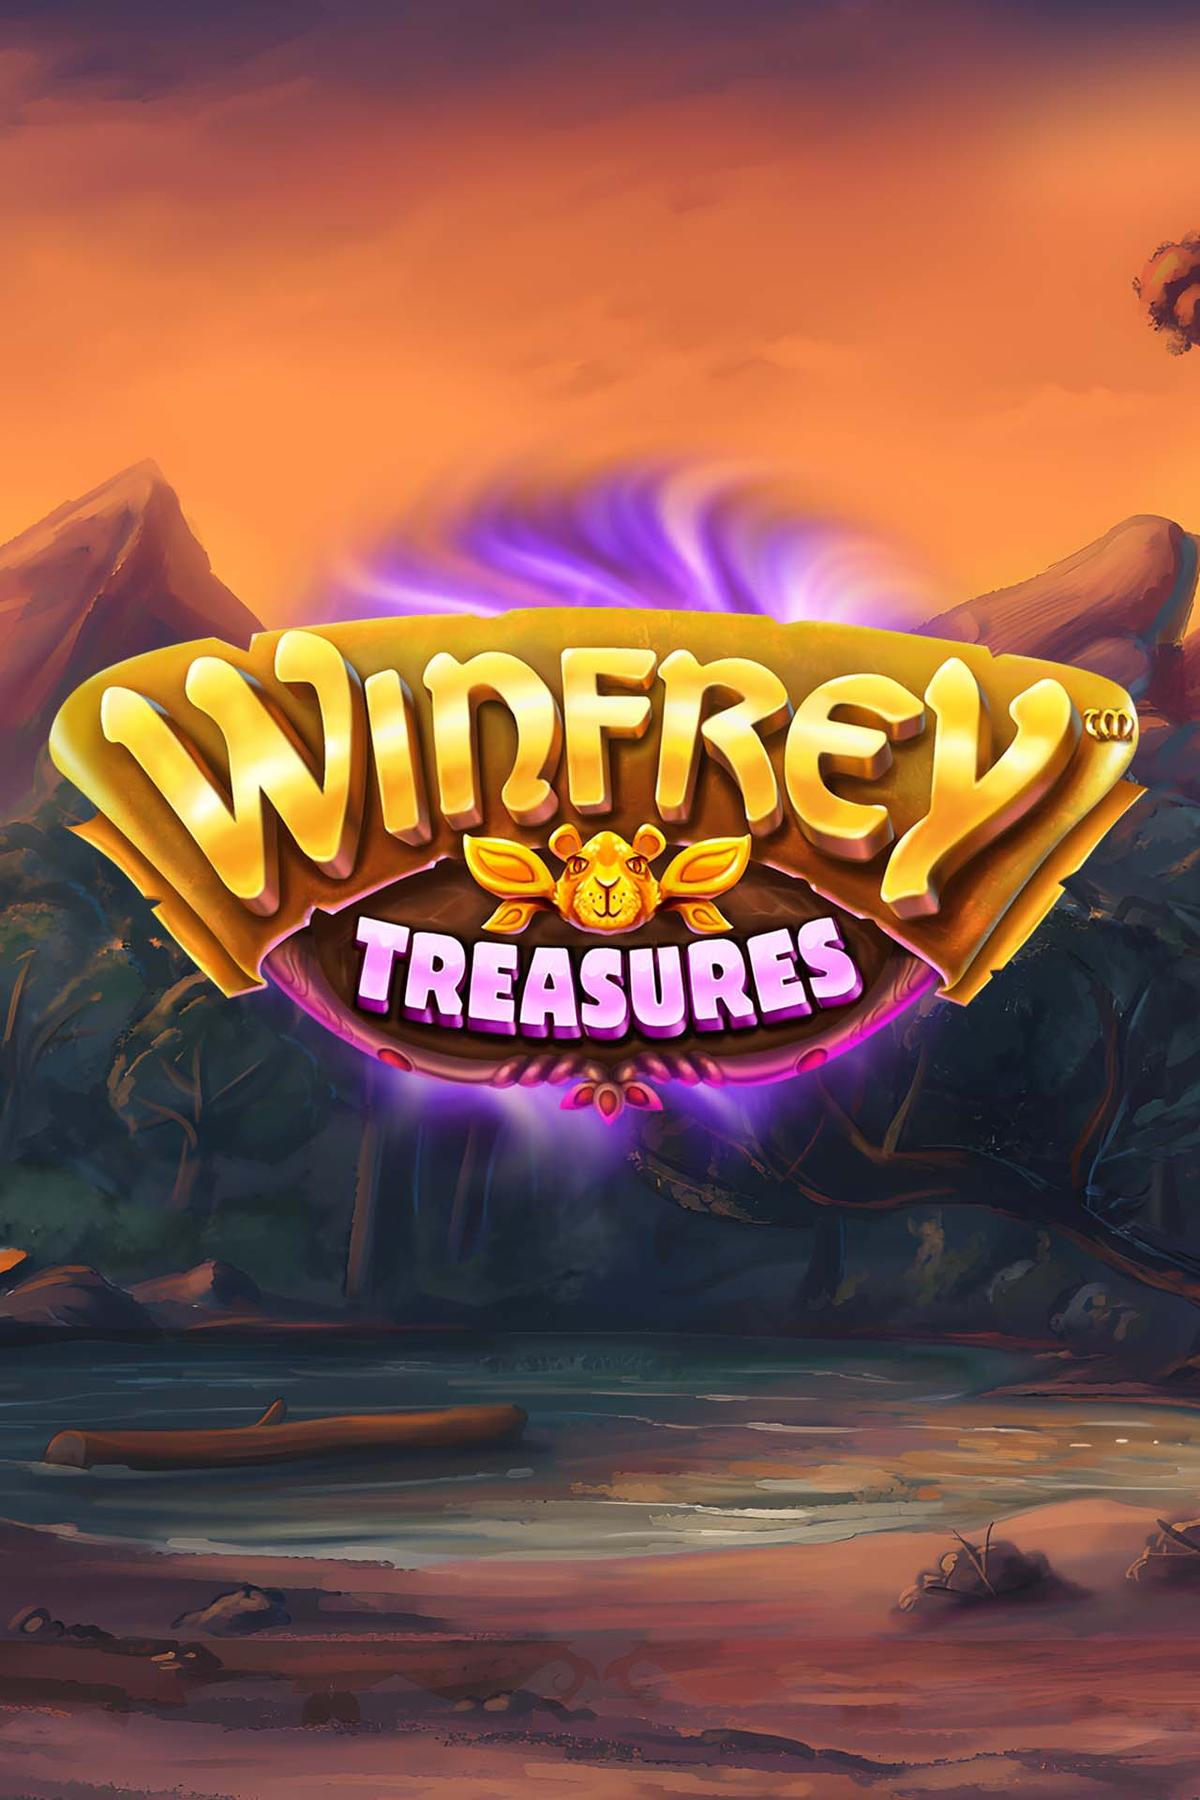 Winfrey Treasure